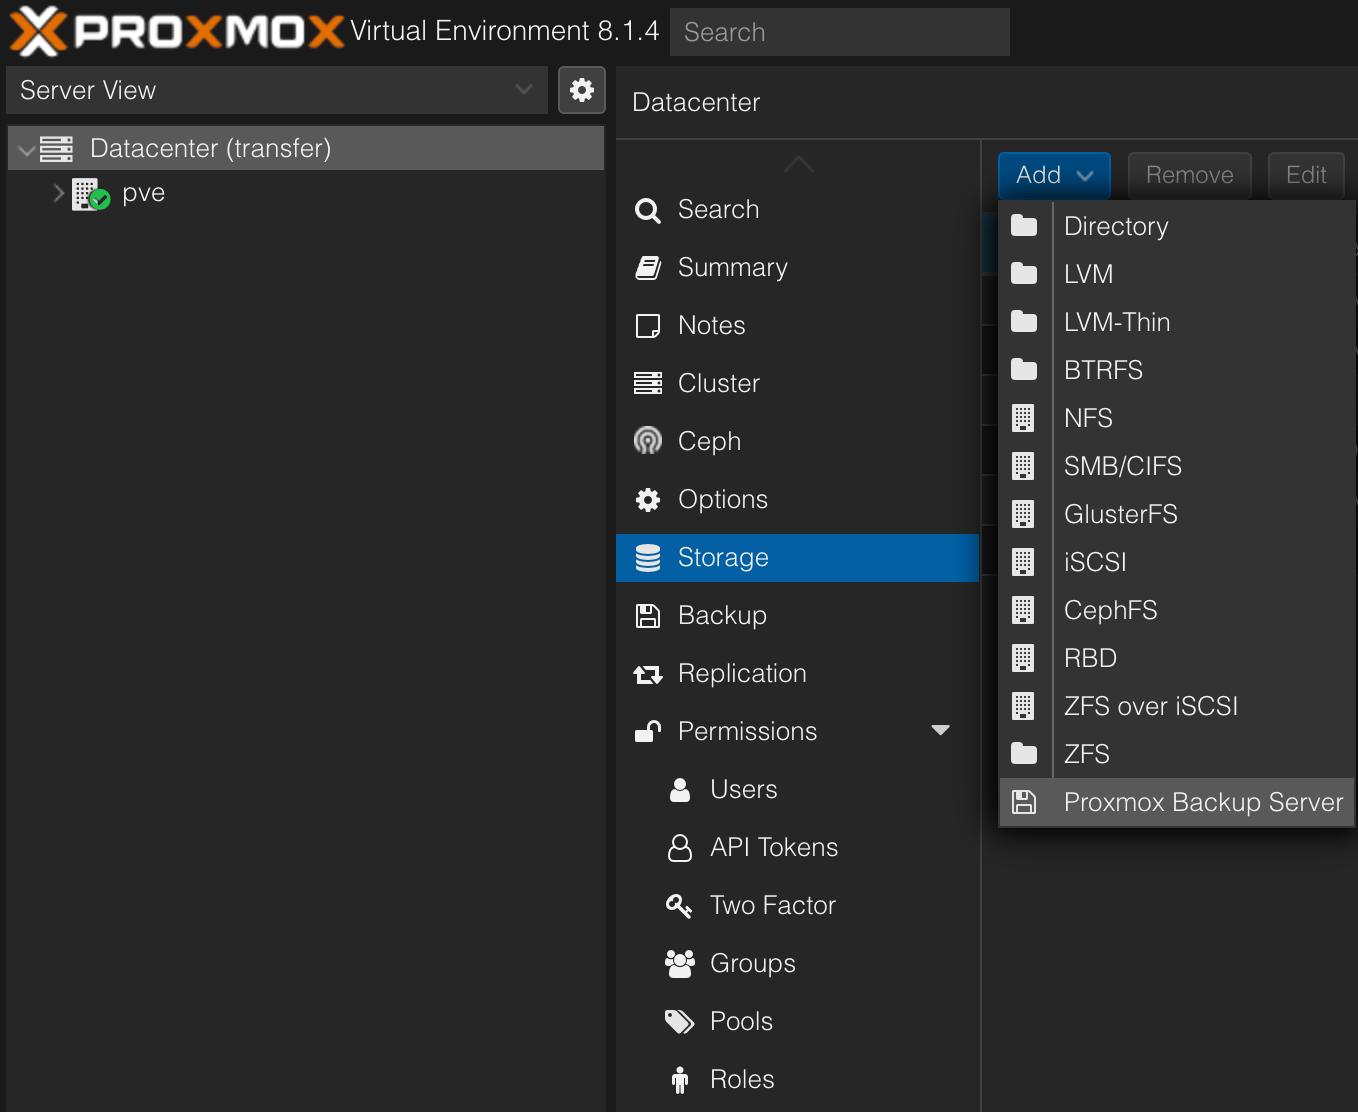 Offsite Proxmox Backup Server with S3 Storage